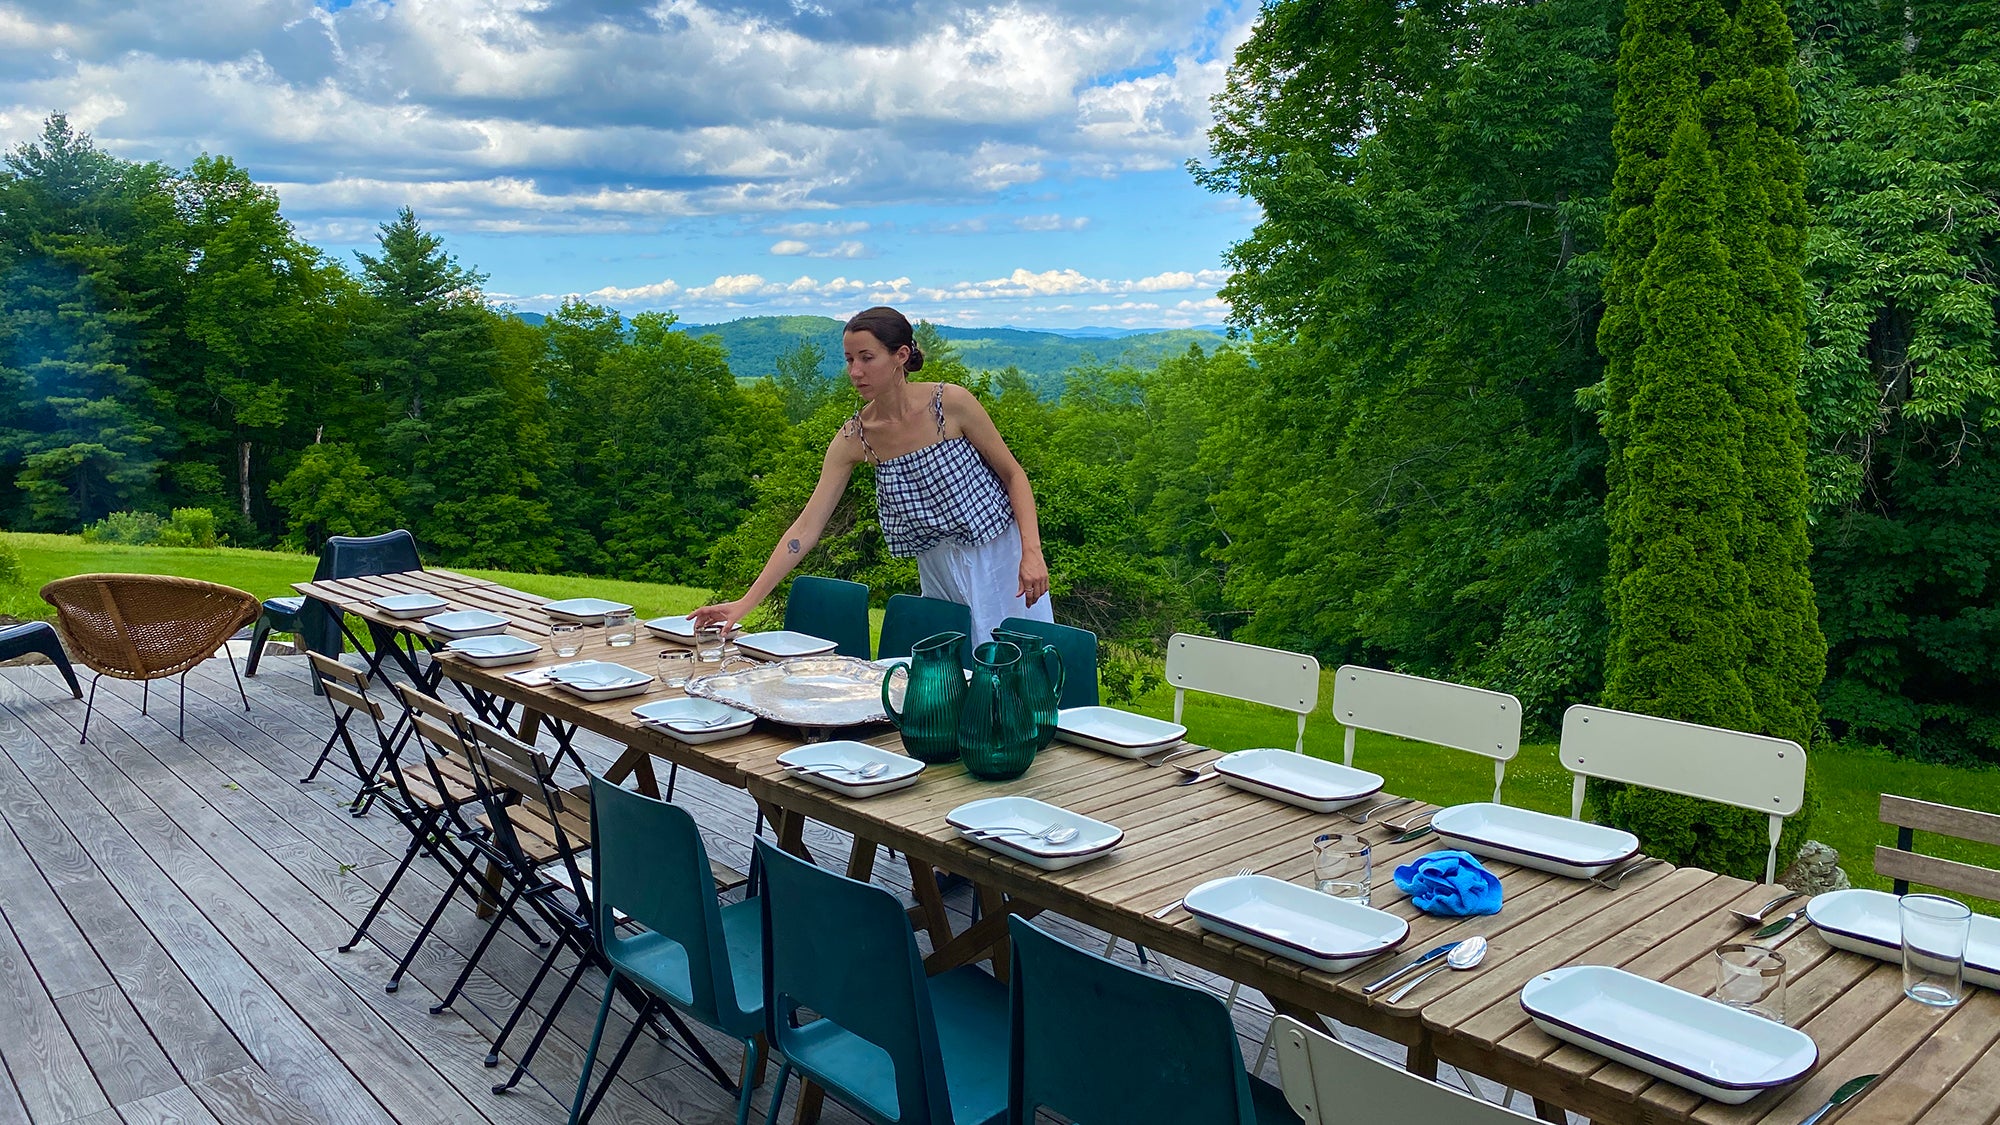 Sommelier Amanda Geller helps prepare the table at Esmeralda restaurant in Andover, Vermont